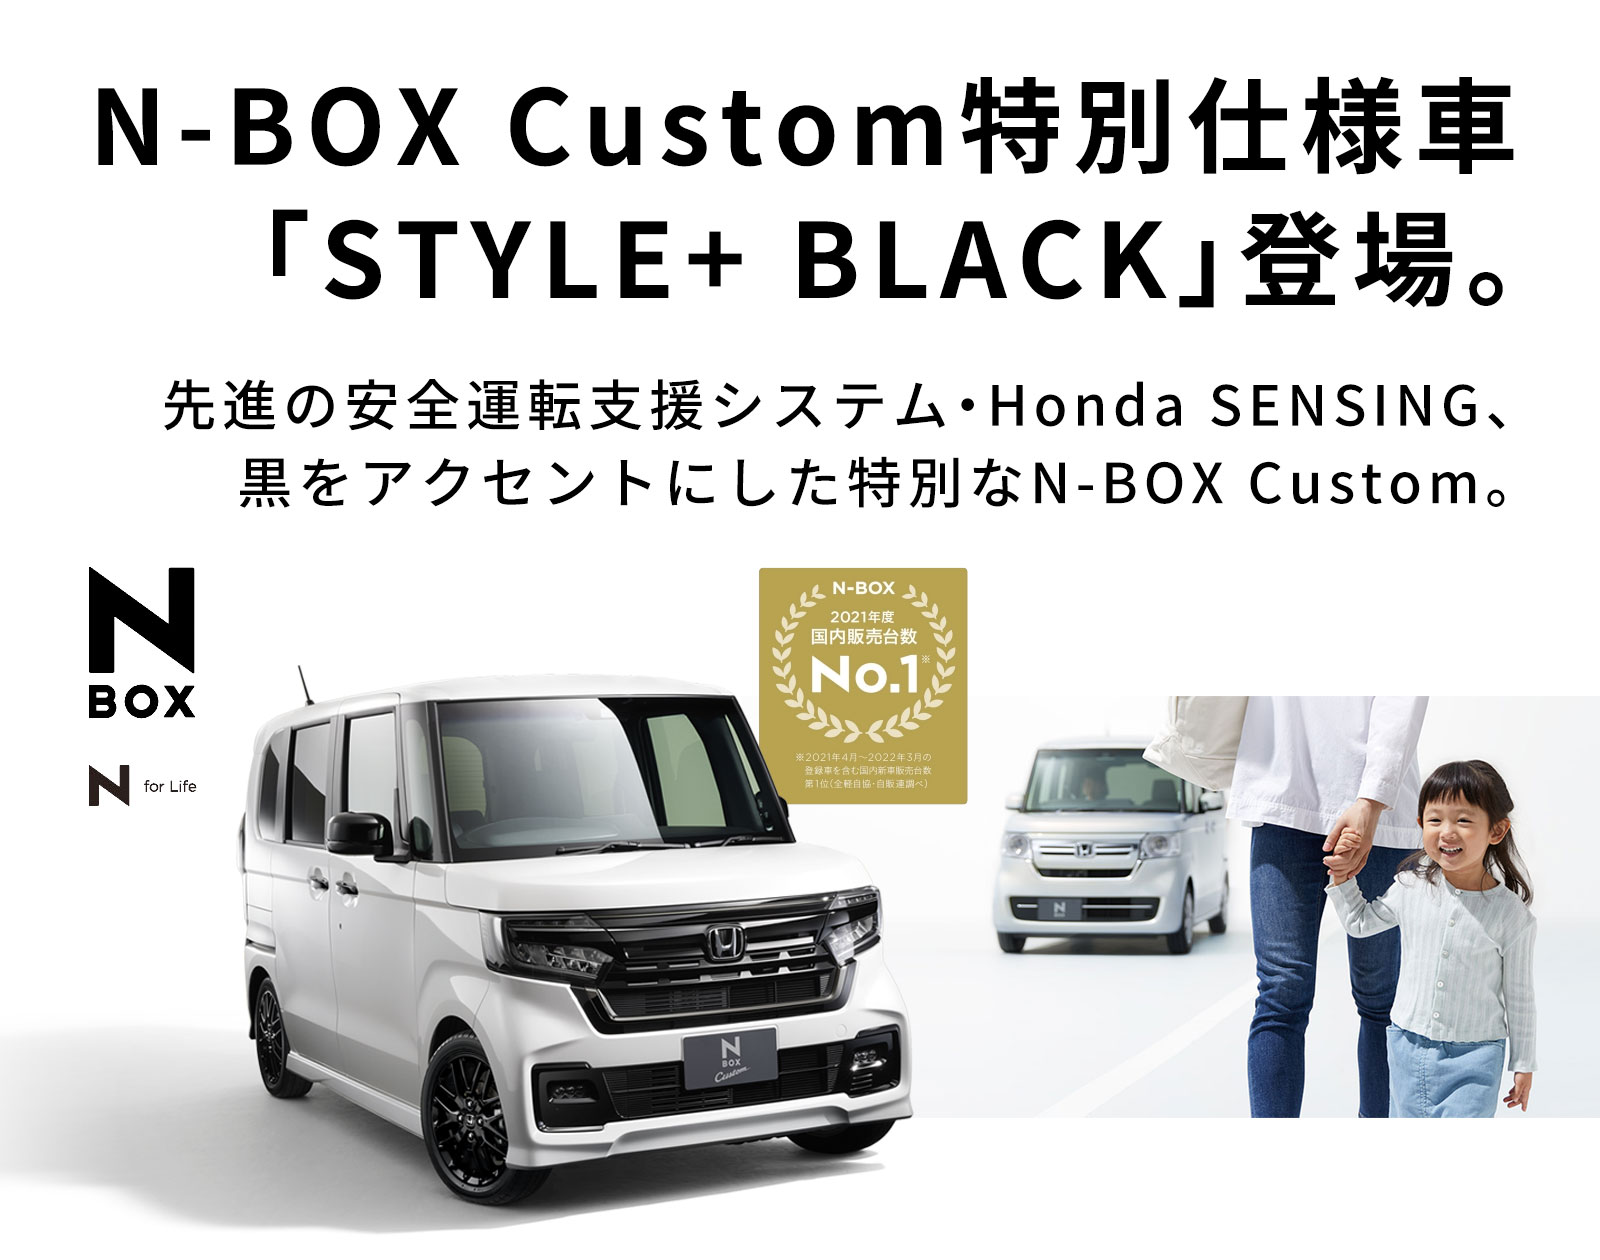 N-BOX Custom特別仕様車「STYLE+ BLACK」登場。黒をアクセントにした特別なN-BOX Custom